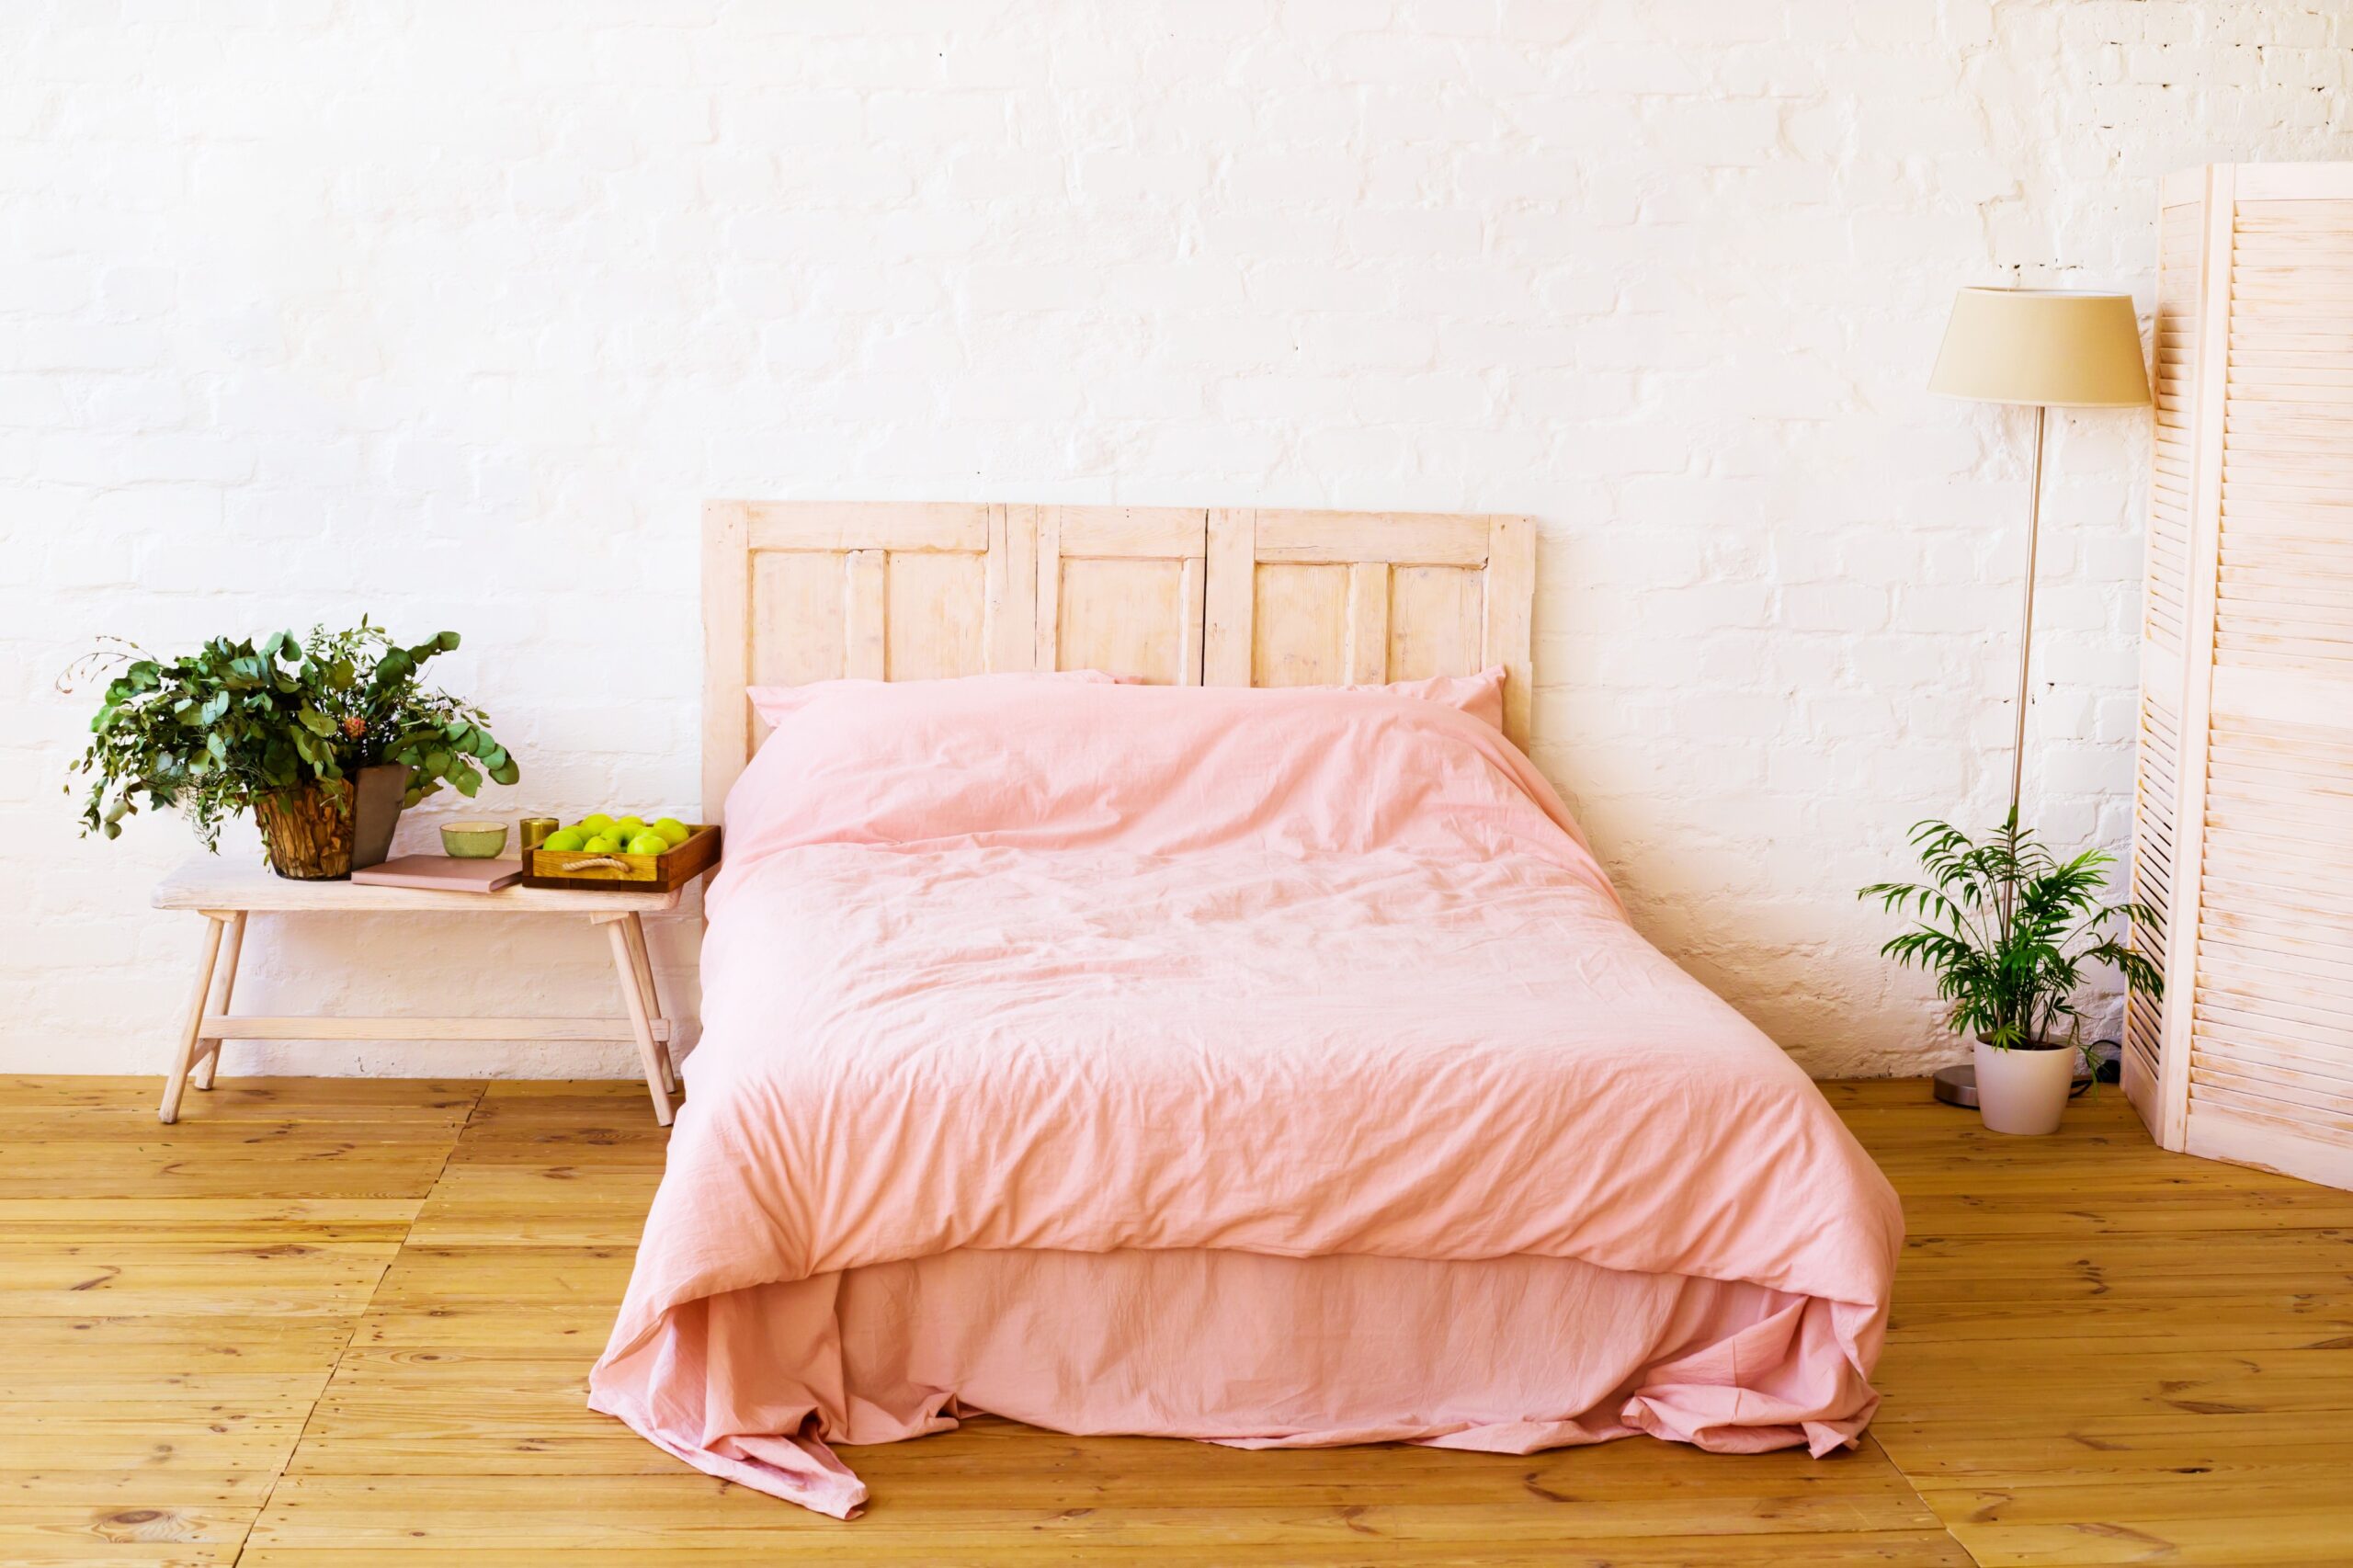 <img src="simple.jpg" alt="simple colourful bedroom trends"/> 